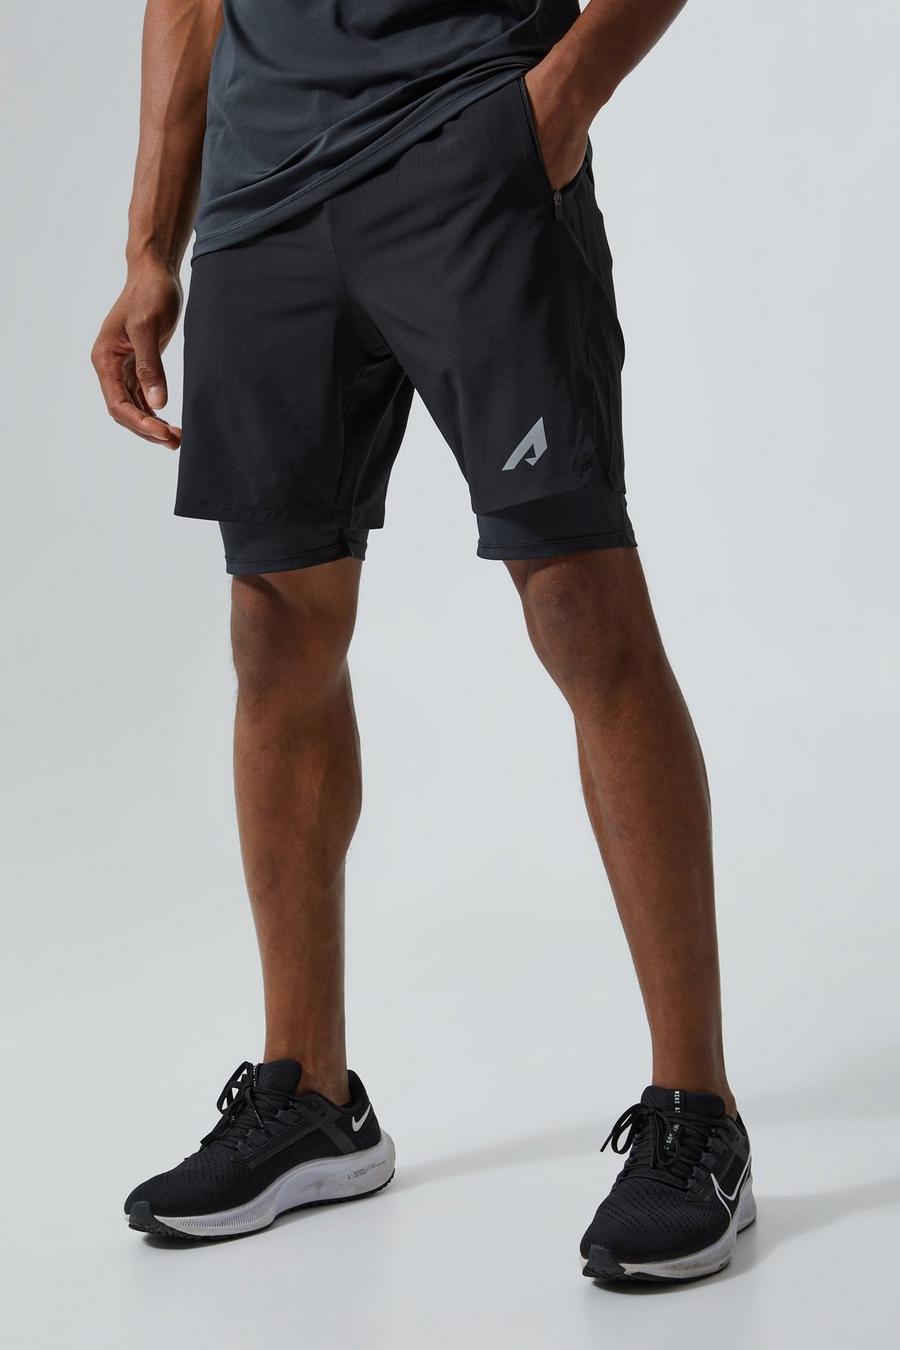 Black noir Active 2 In 1 Reflective Shorts